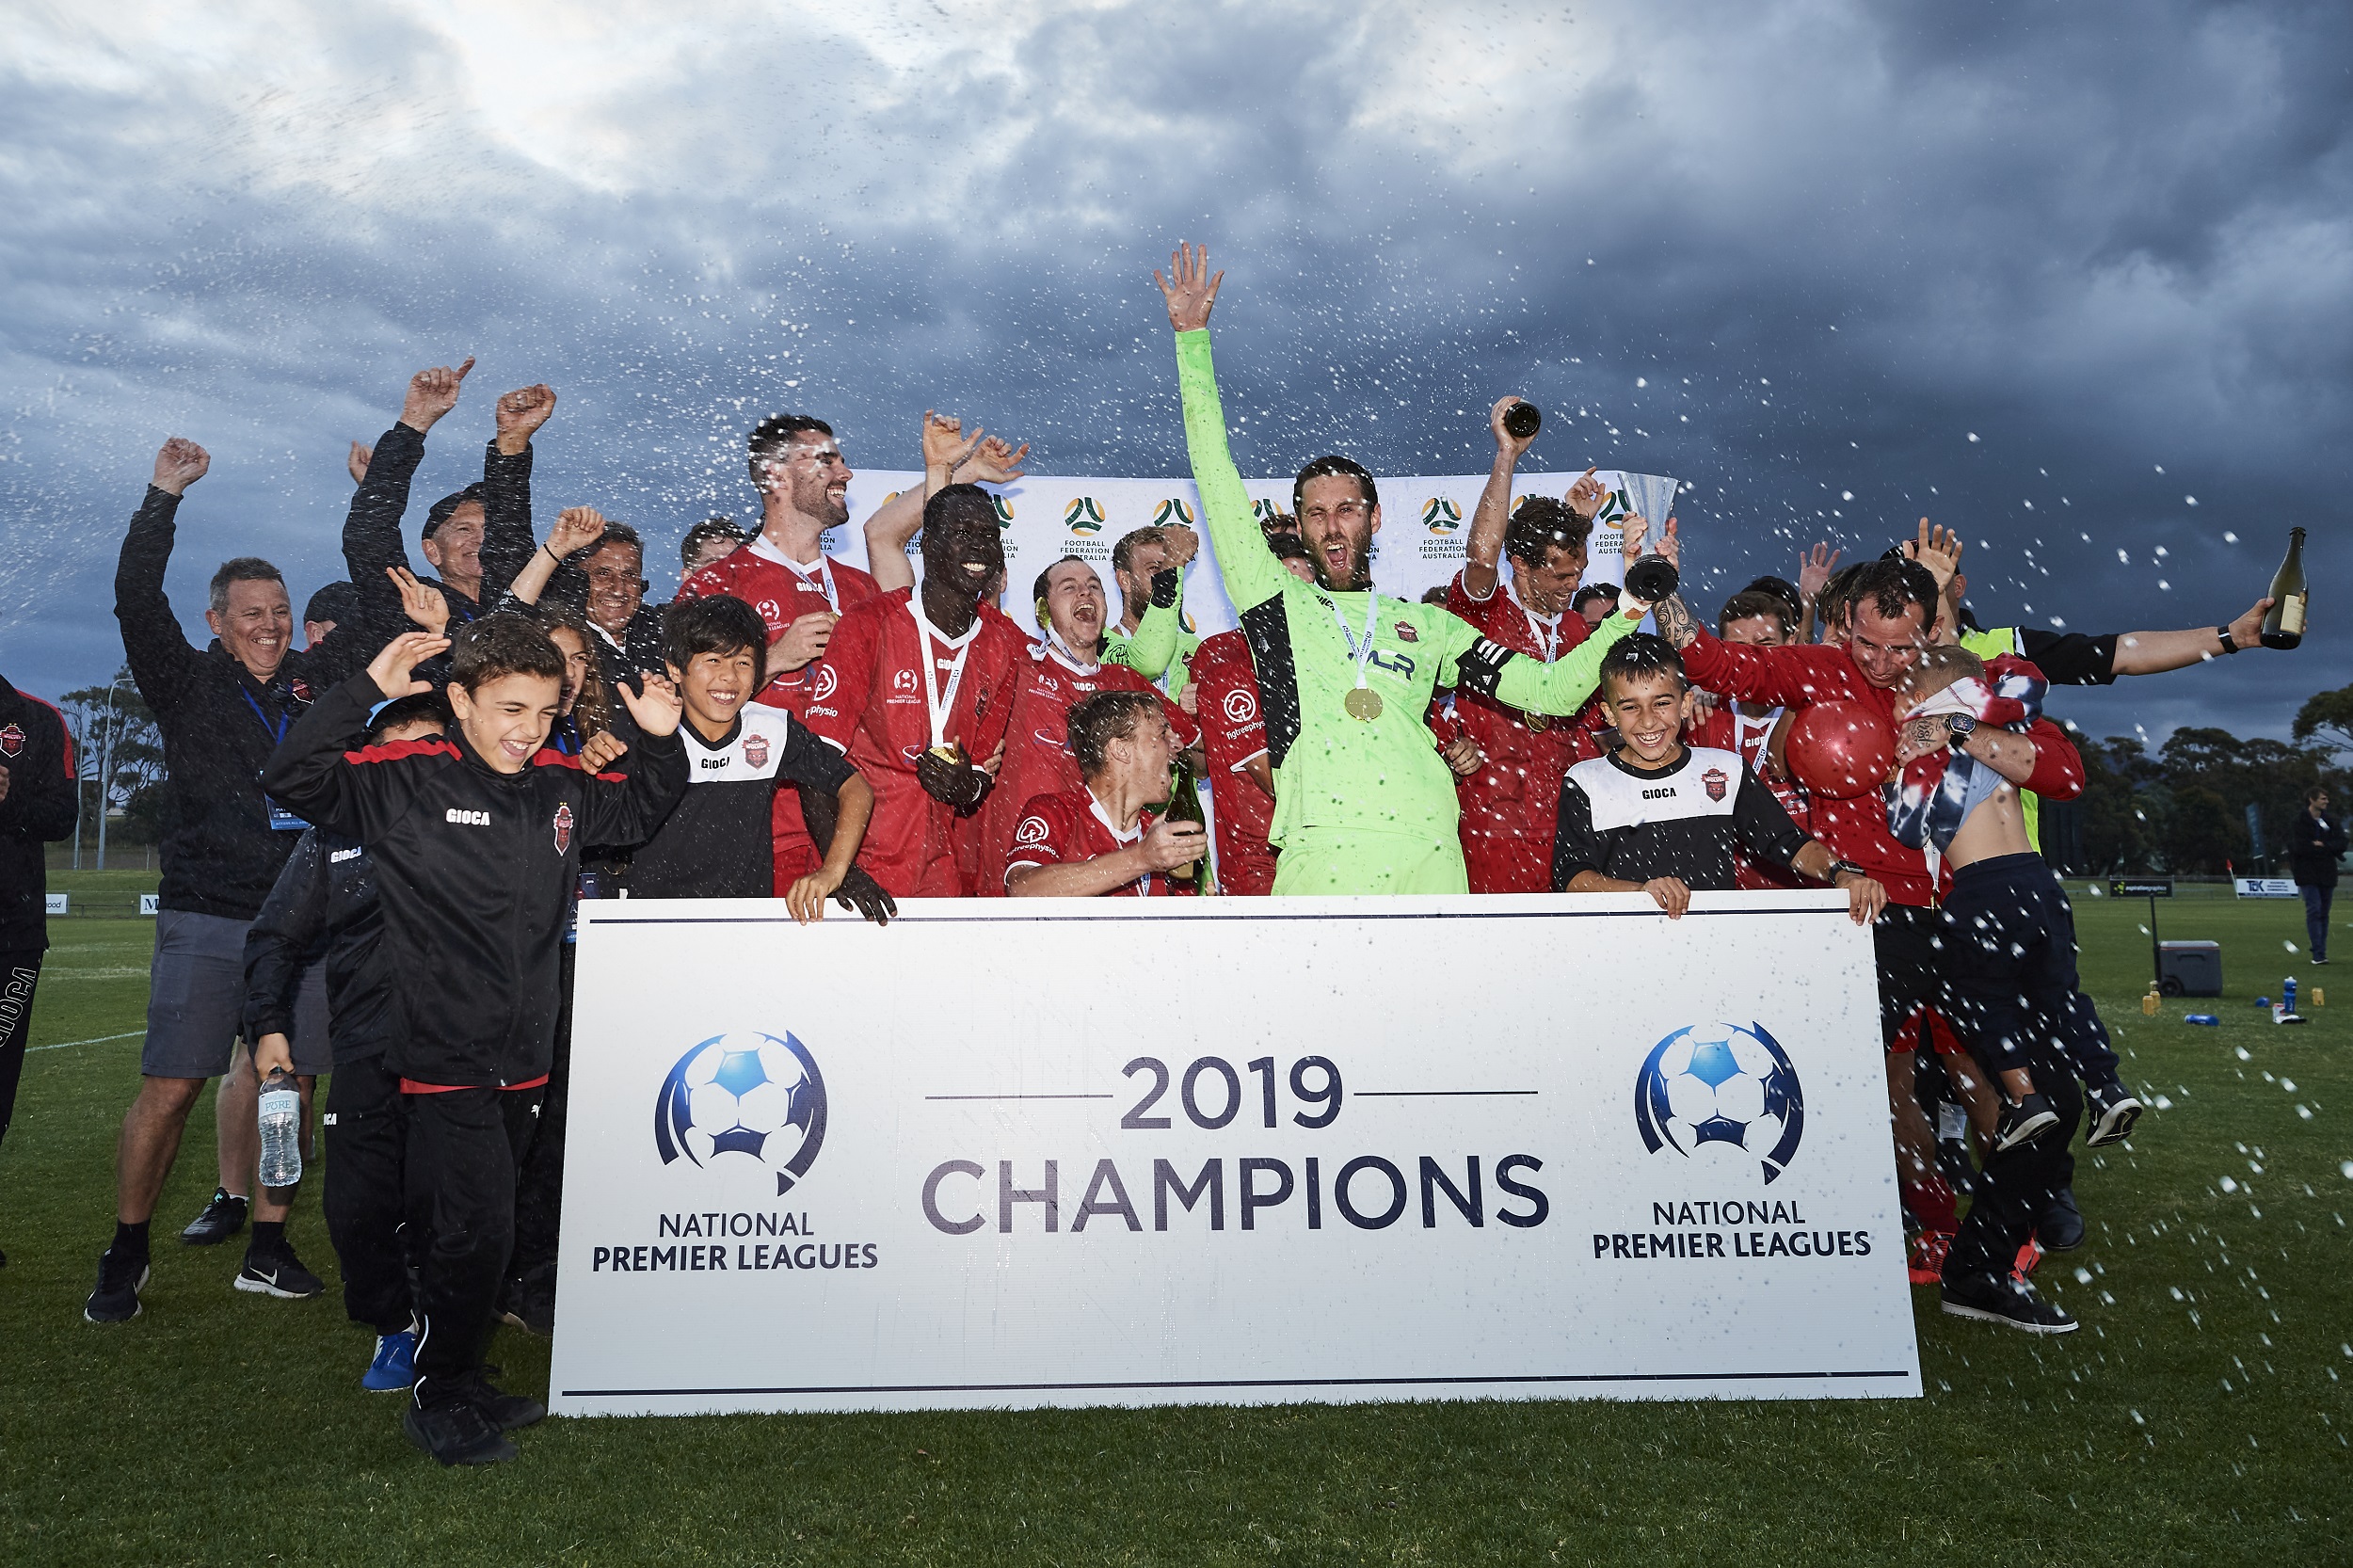 Wollongong Wolves - NPL Champions 2019